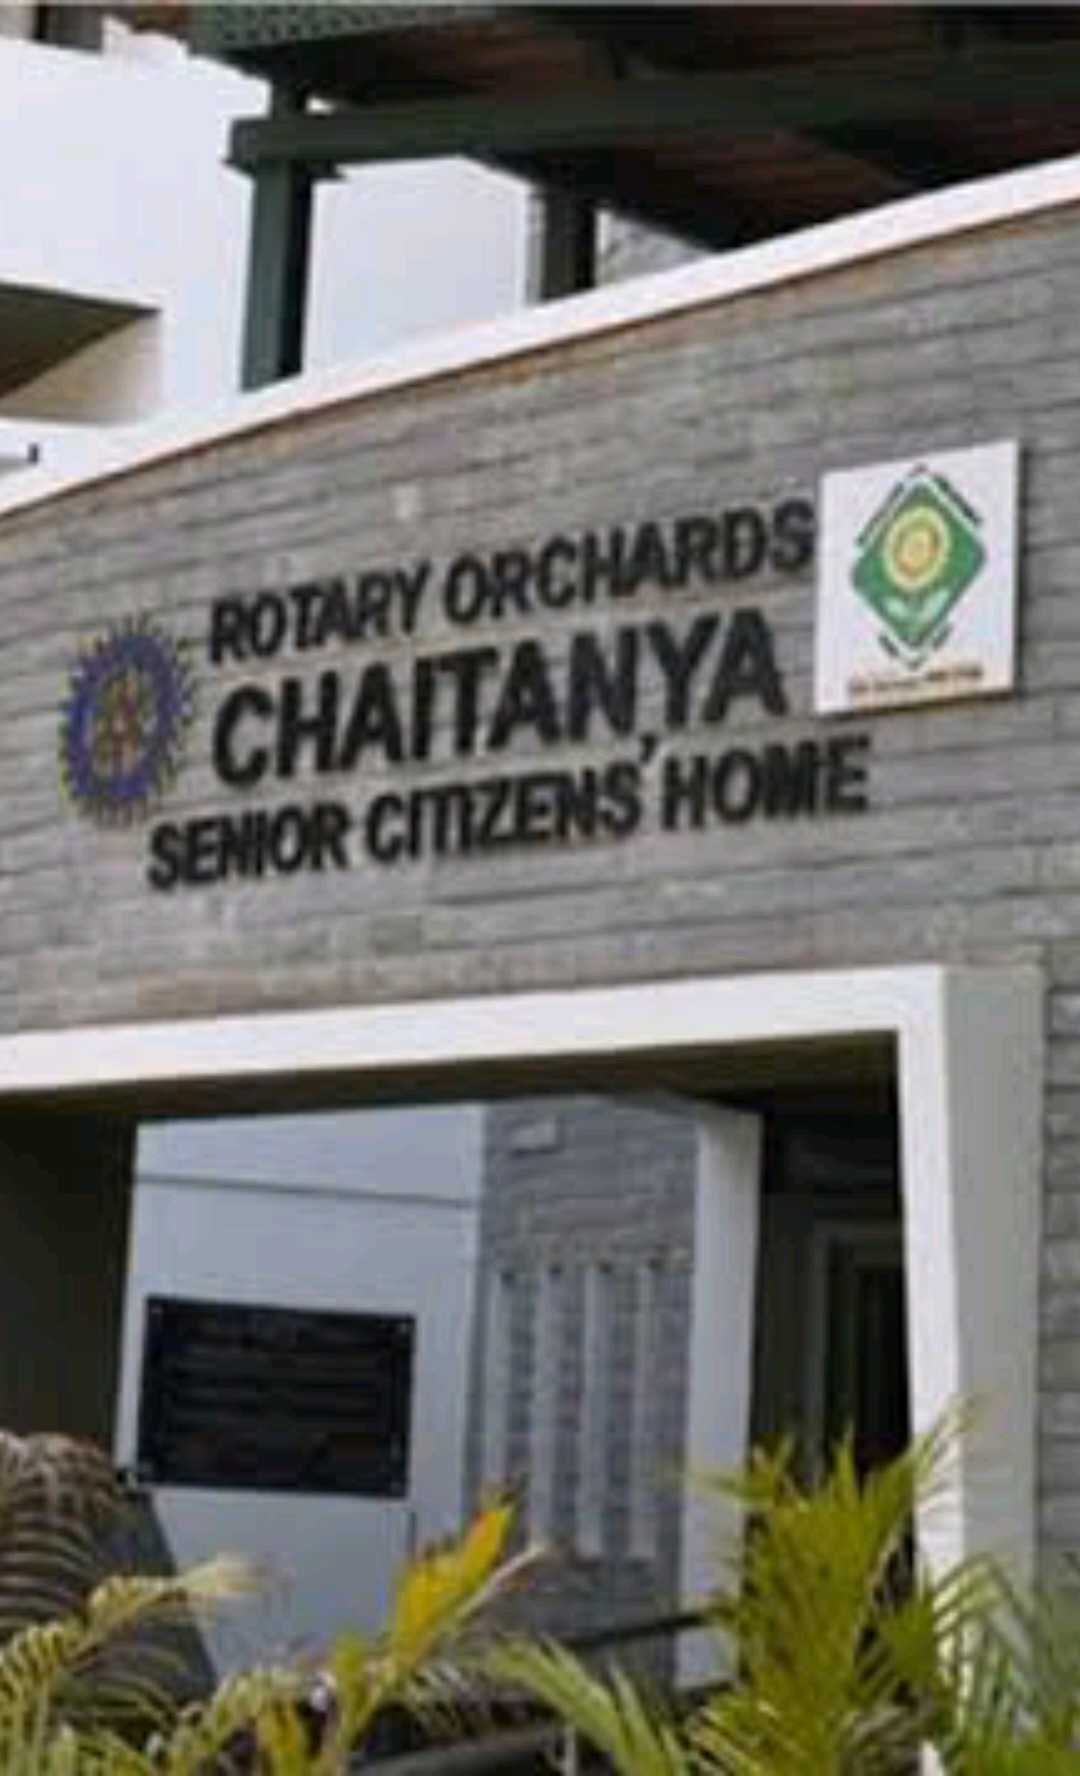 Rotary Orchards Chaitanya Senior Citizens Home in Yelahanka,  Bangalore-560064 | Sulekha Bangalore